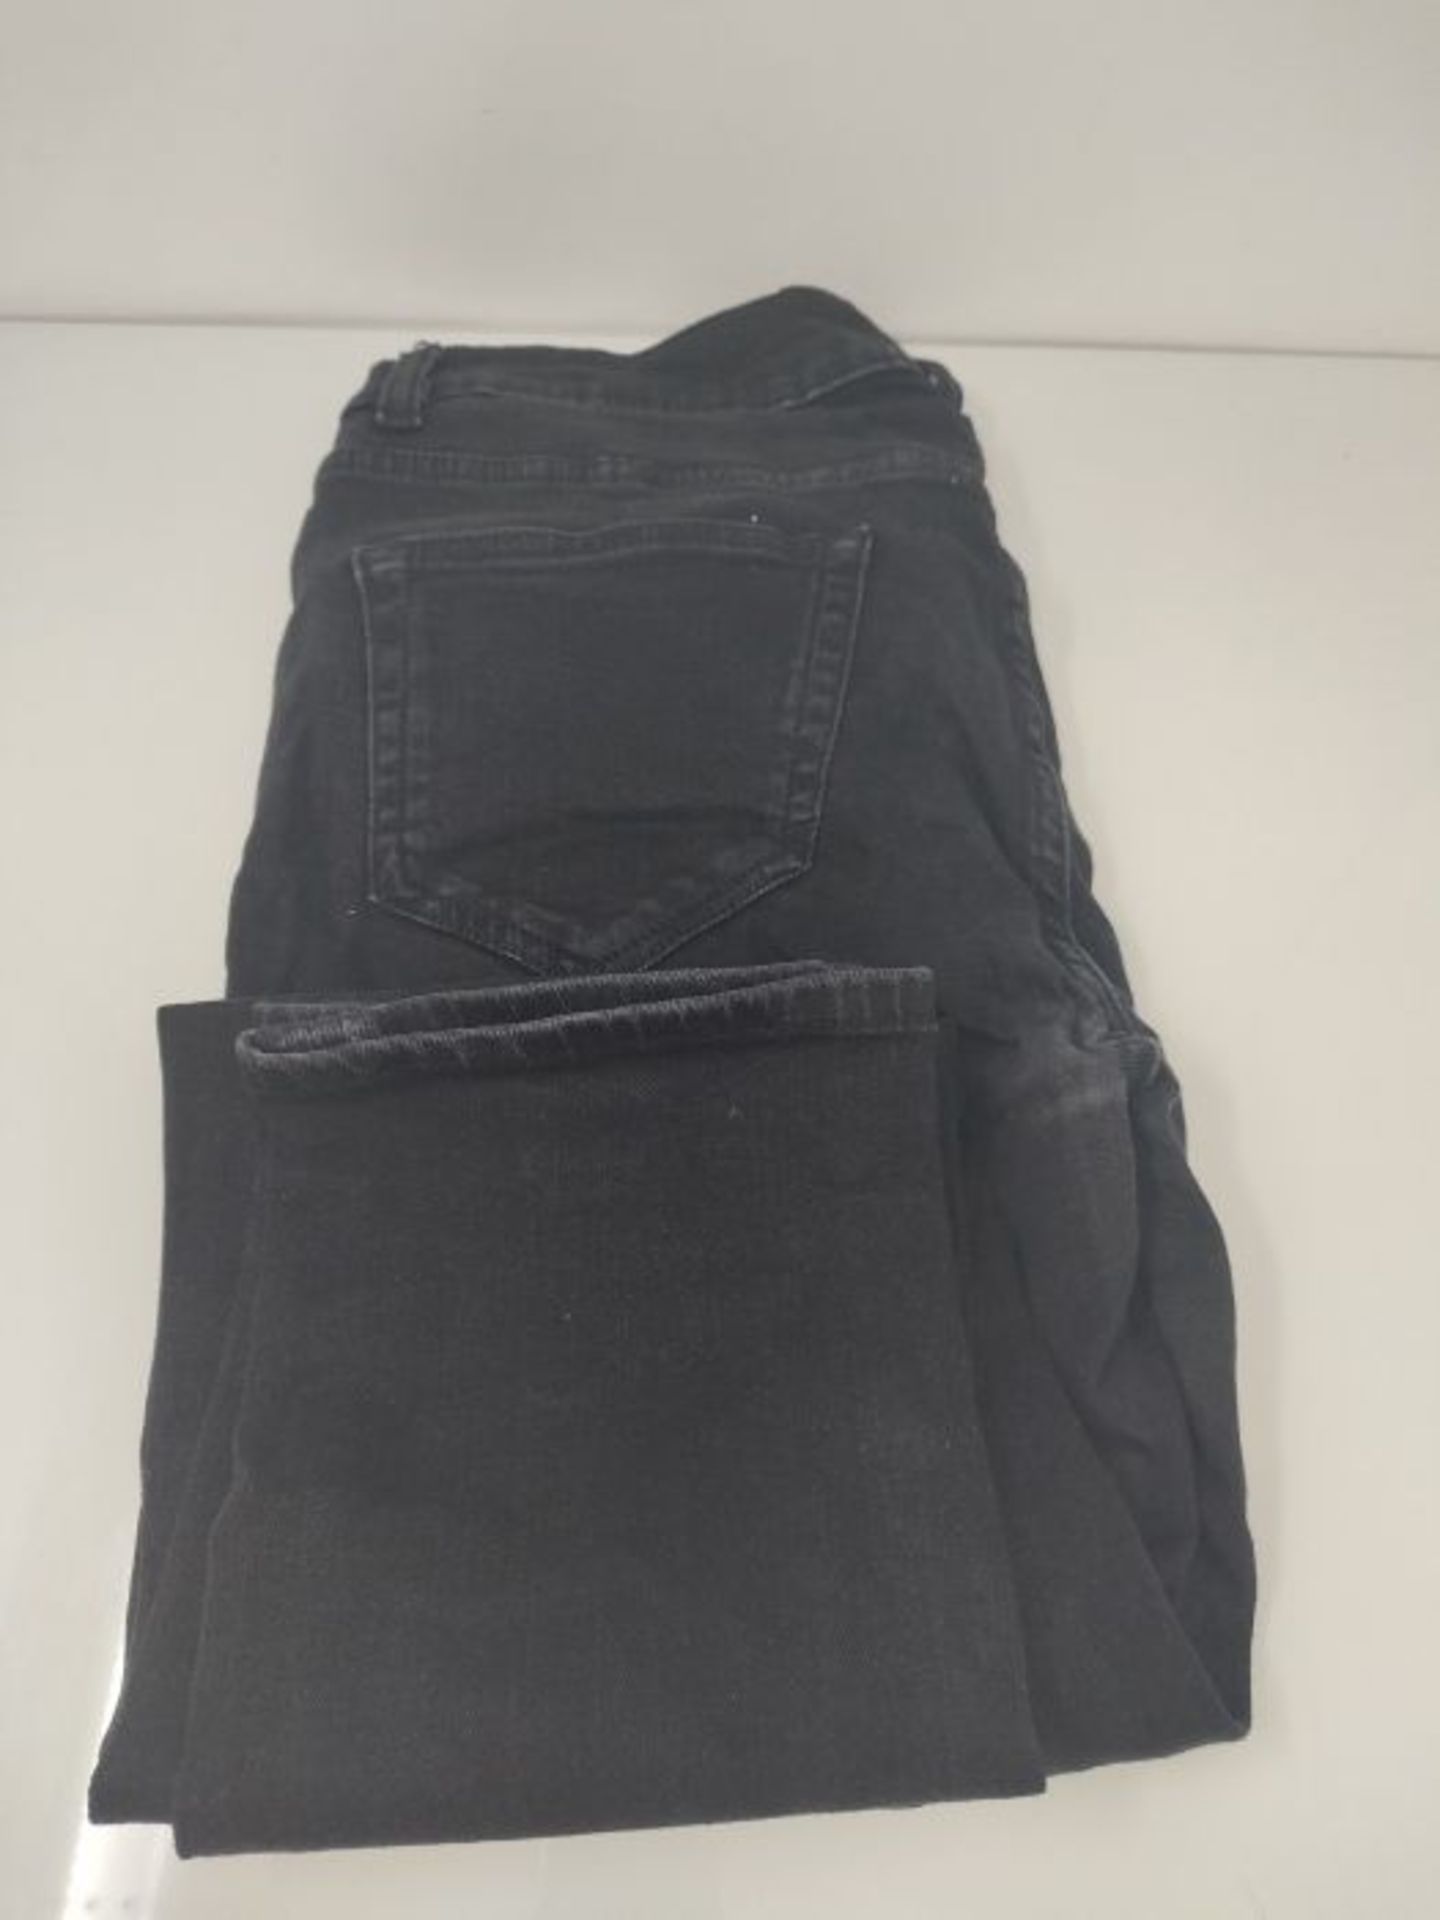 Only & Sons Men's Onsloom Dcc 0448 Noos Slim Jeans, Black (Black Denim Black Denim), W